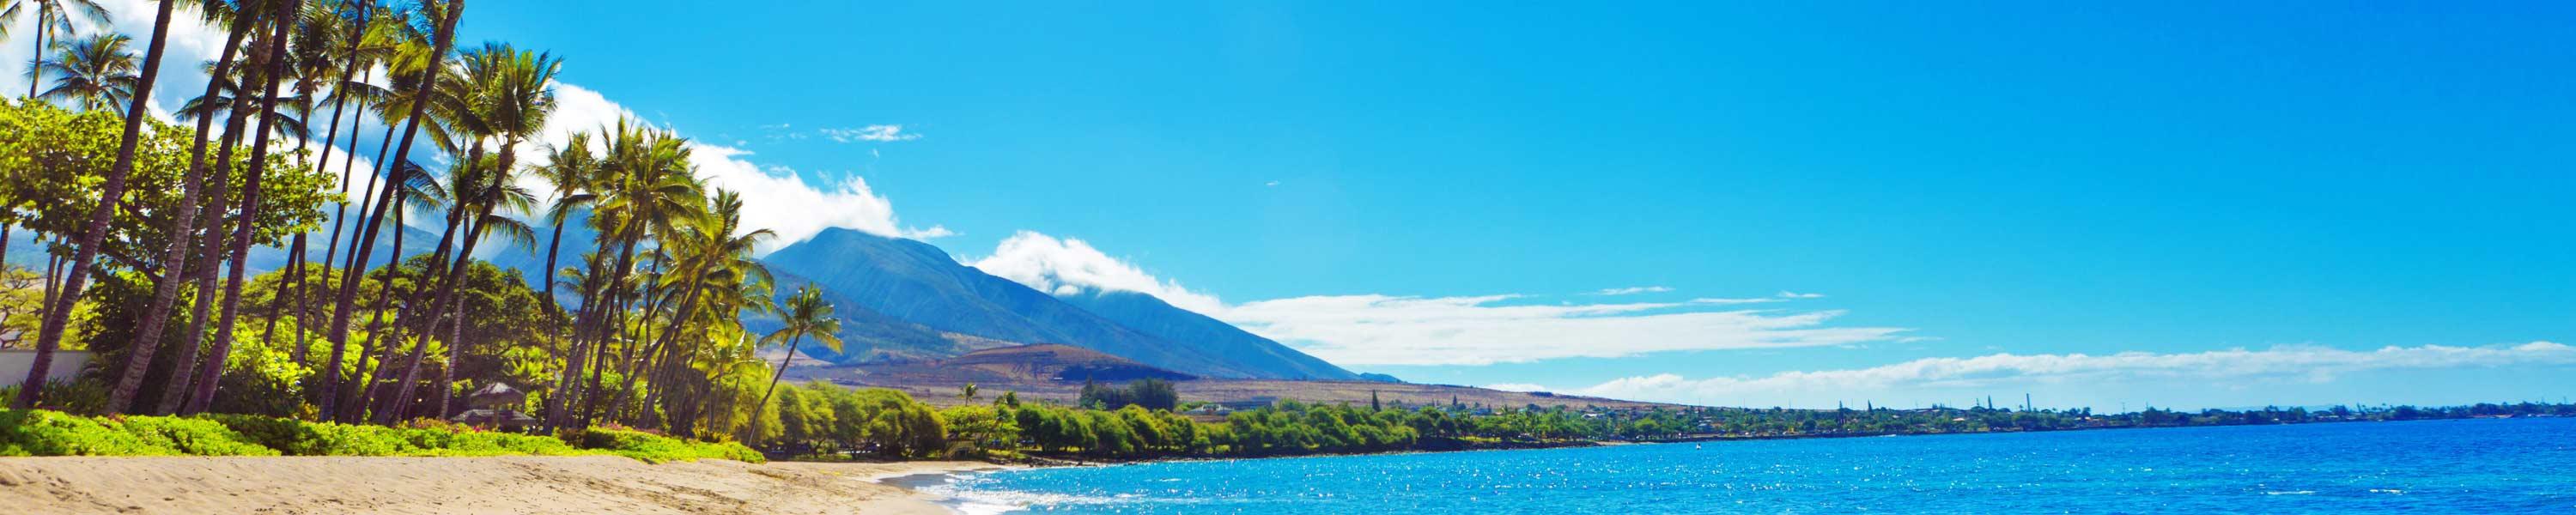 Kaanapali Beach and resort Hotels on Maui Hawaii